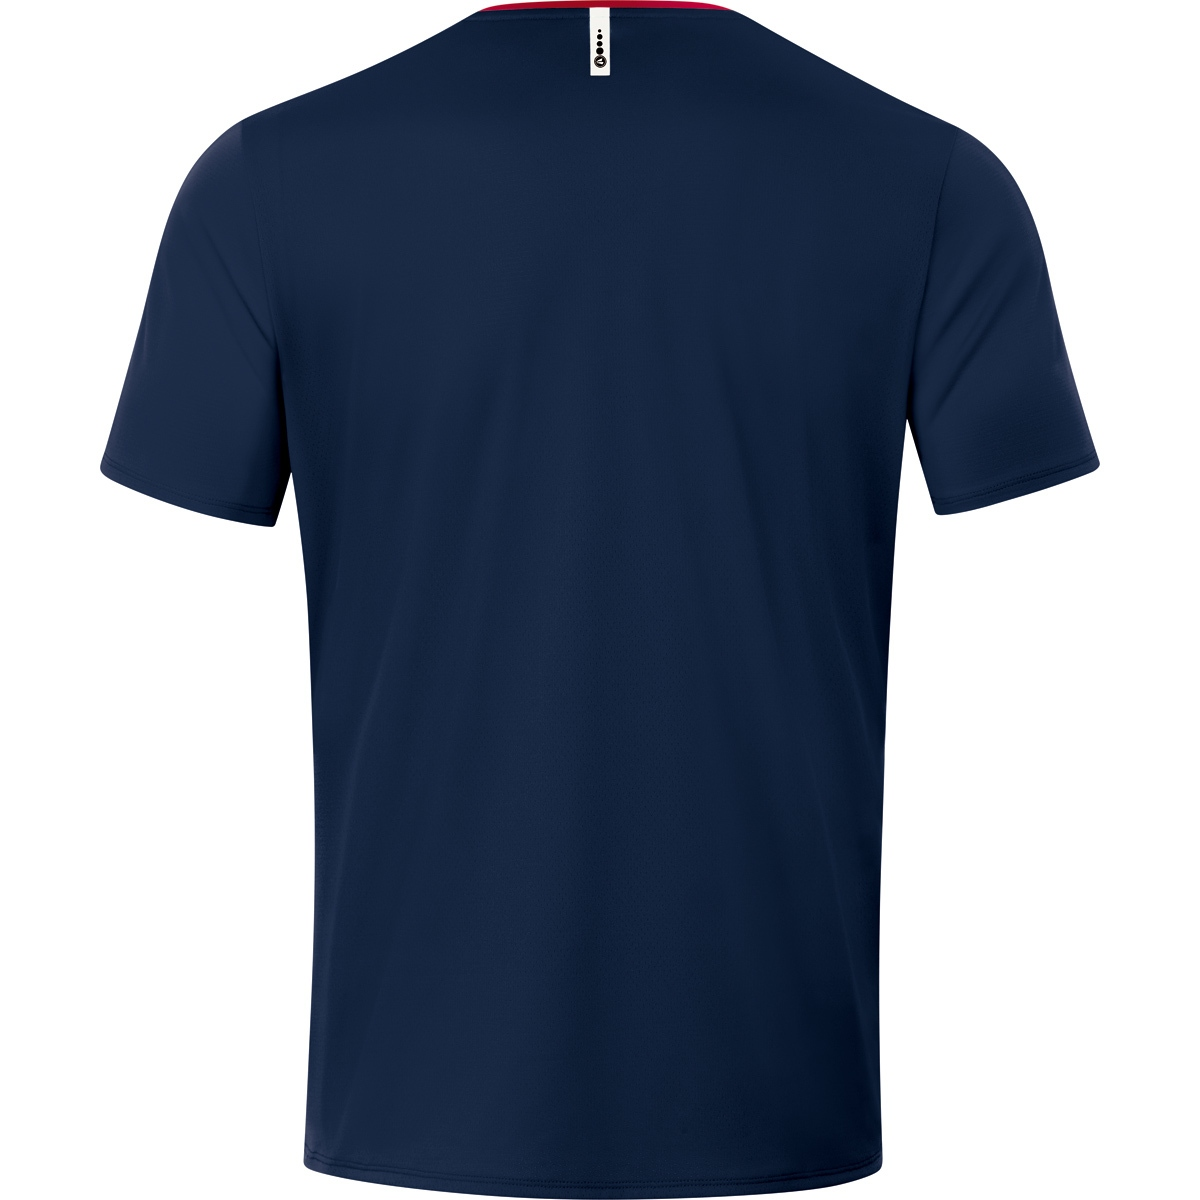 6120 116, marine/chili Kinder, rot, Gr. T-Shirt 2.0 JAKO Champ